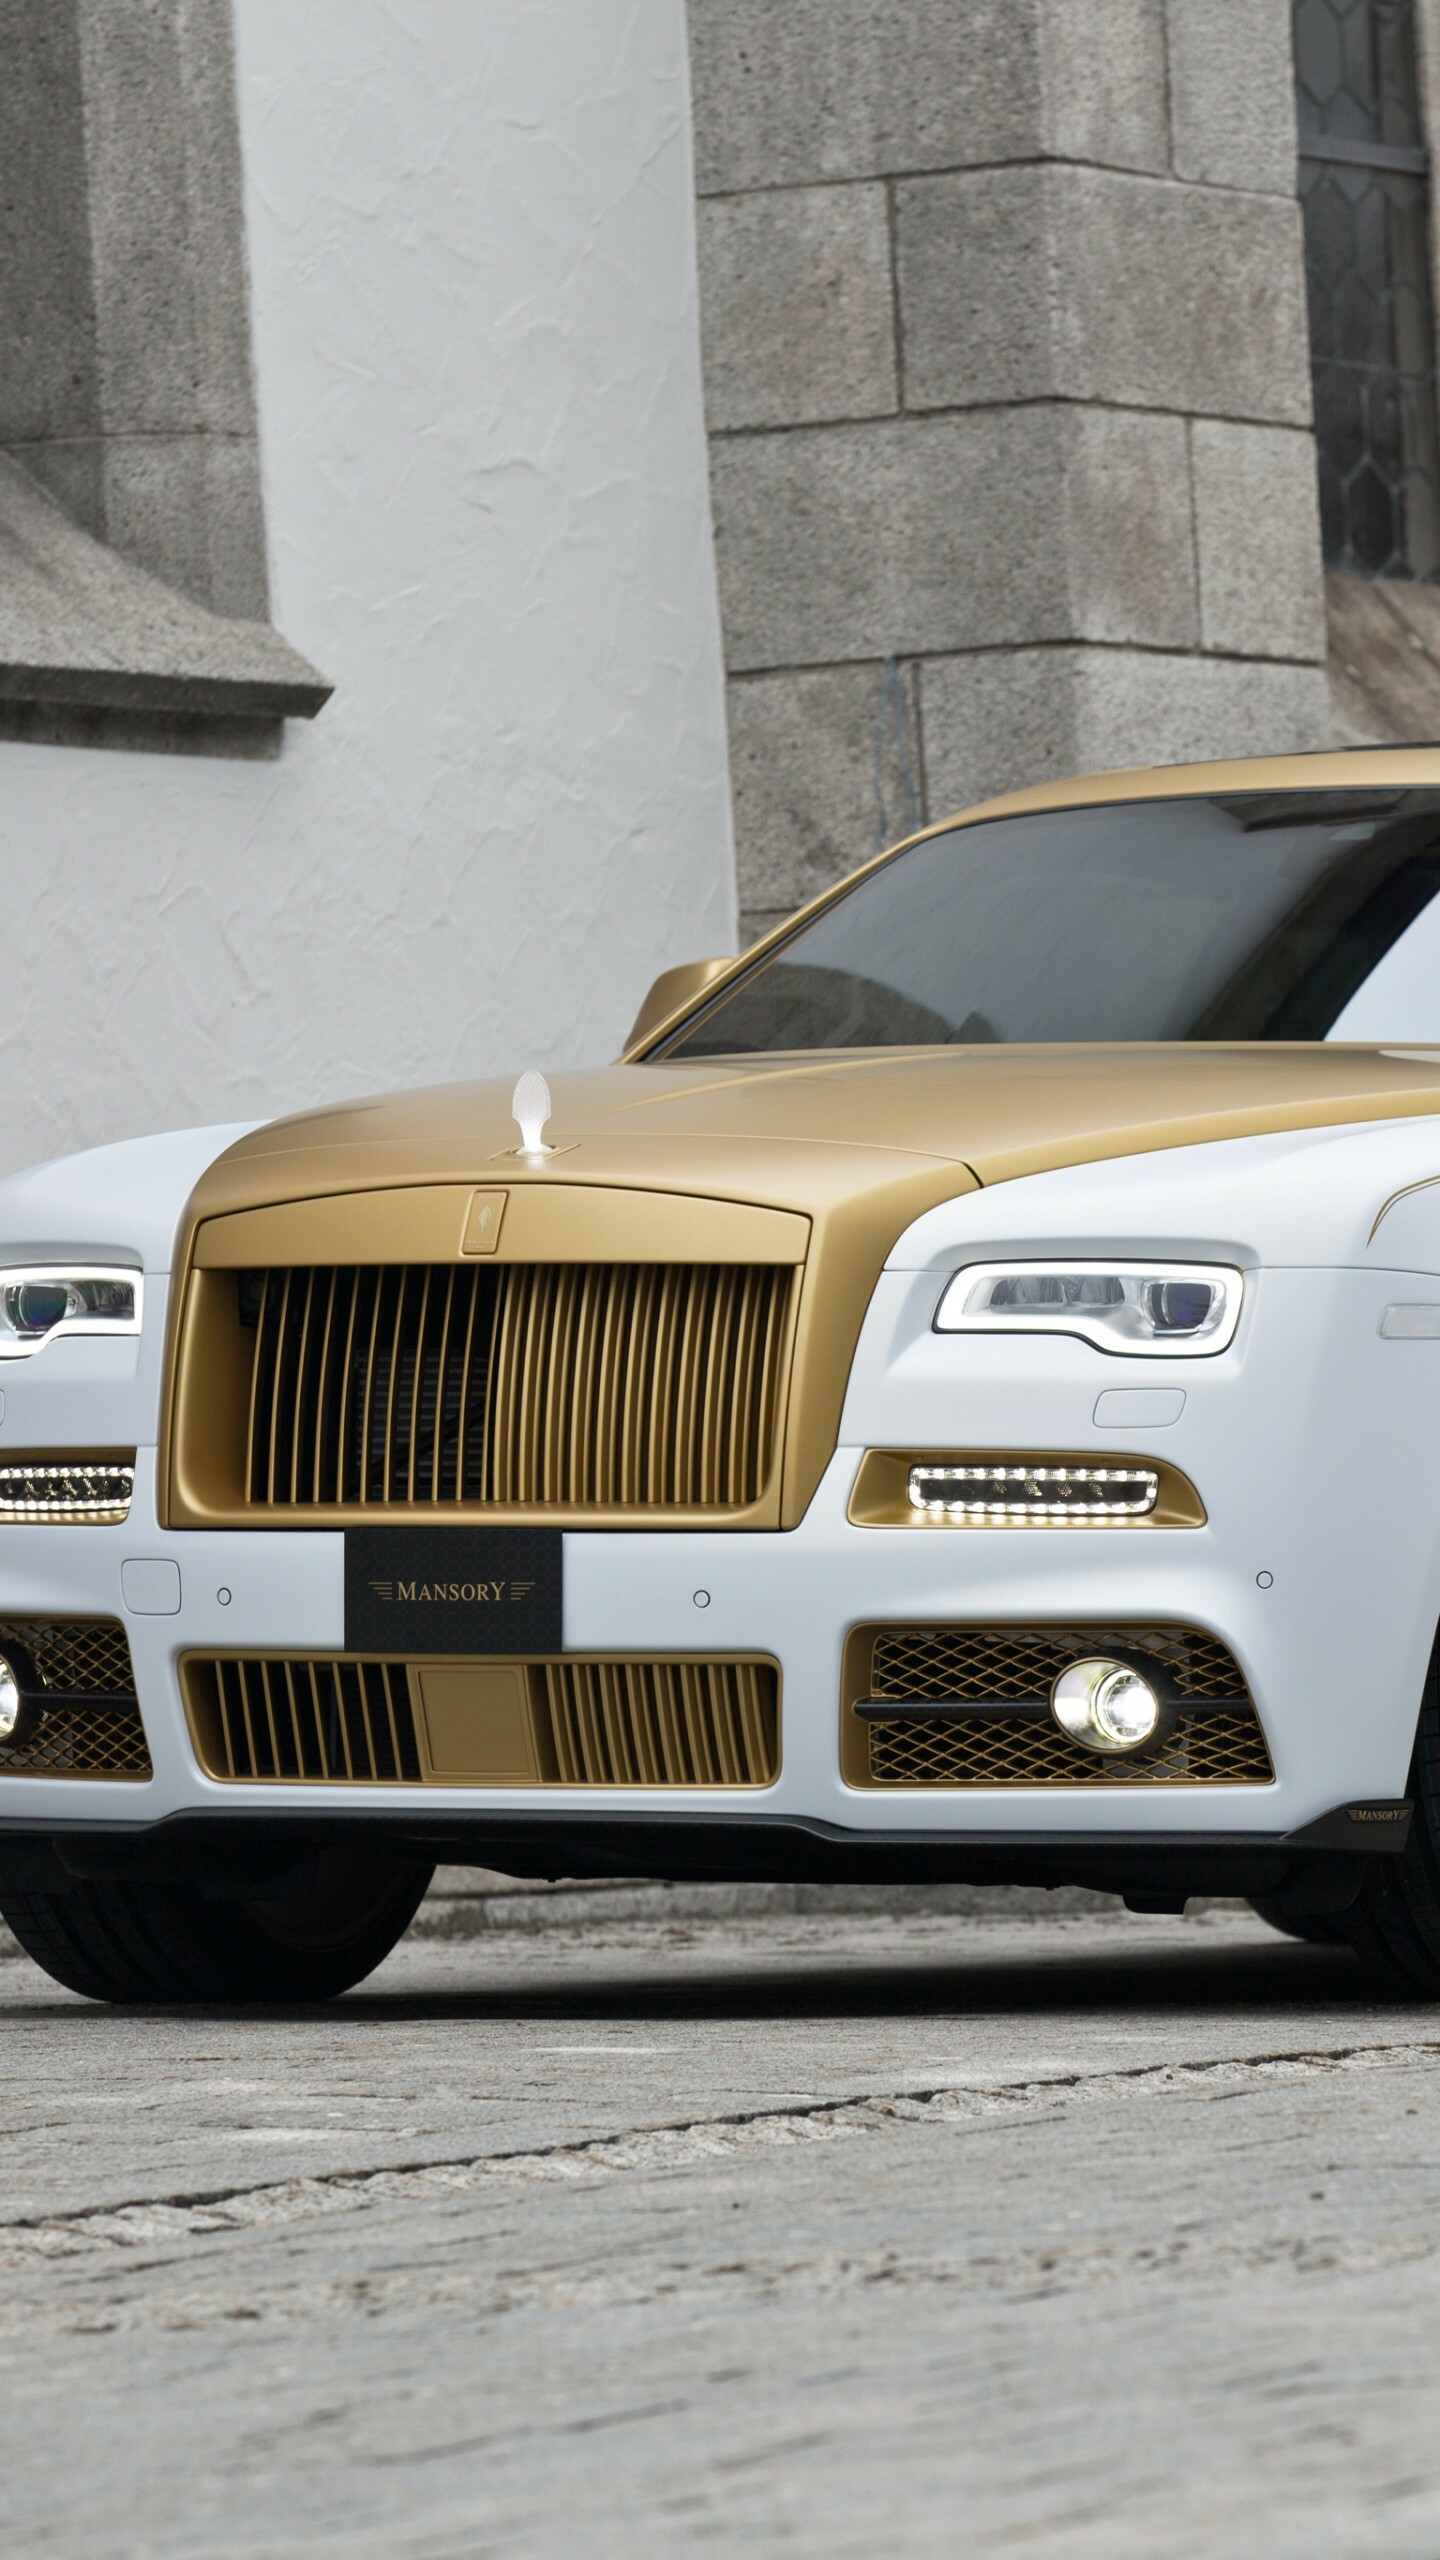 Rolls-Royce: Mansory Wraith, Wraith Palm Edition 999, Geneva Auto Show 2016, Luxury cars. 1440x2560 HD Wallpaper.